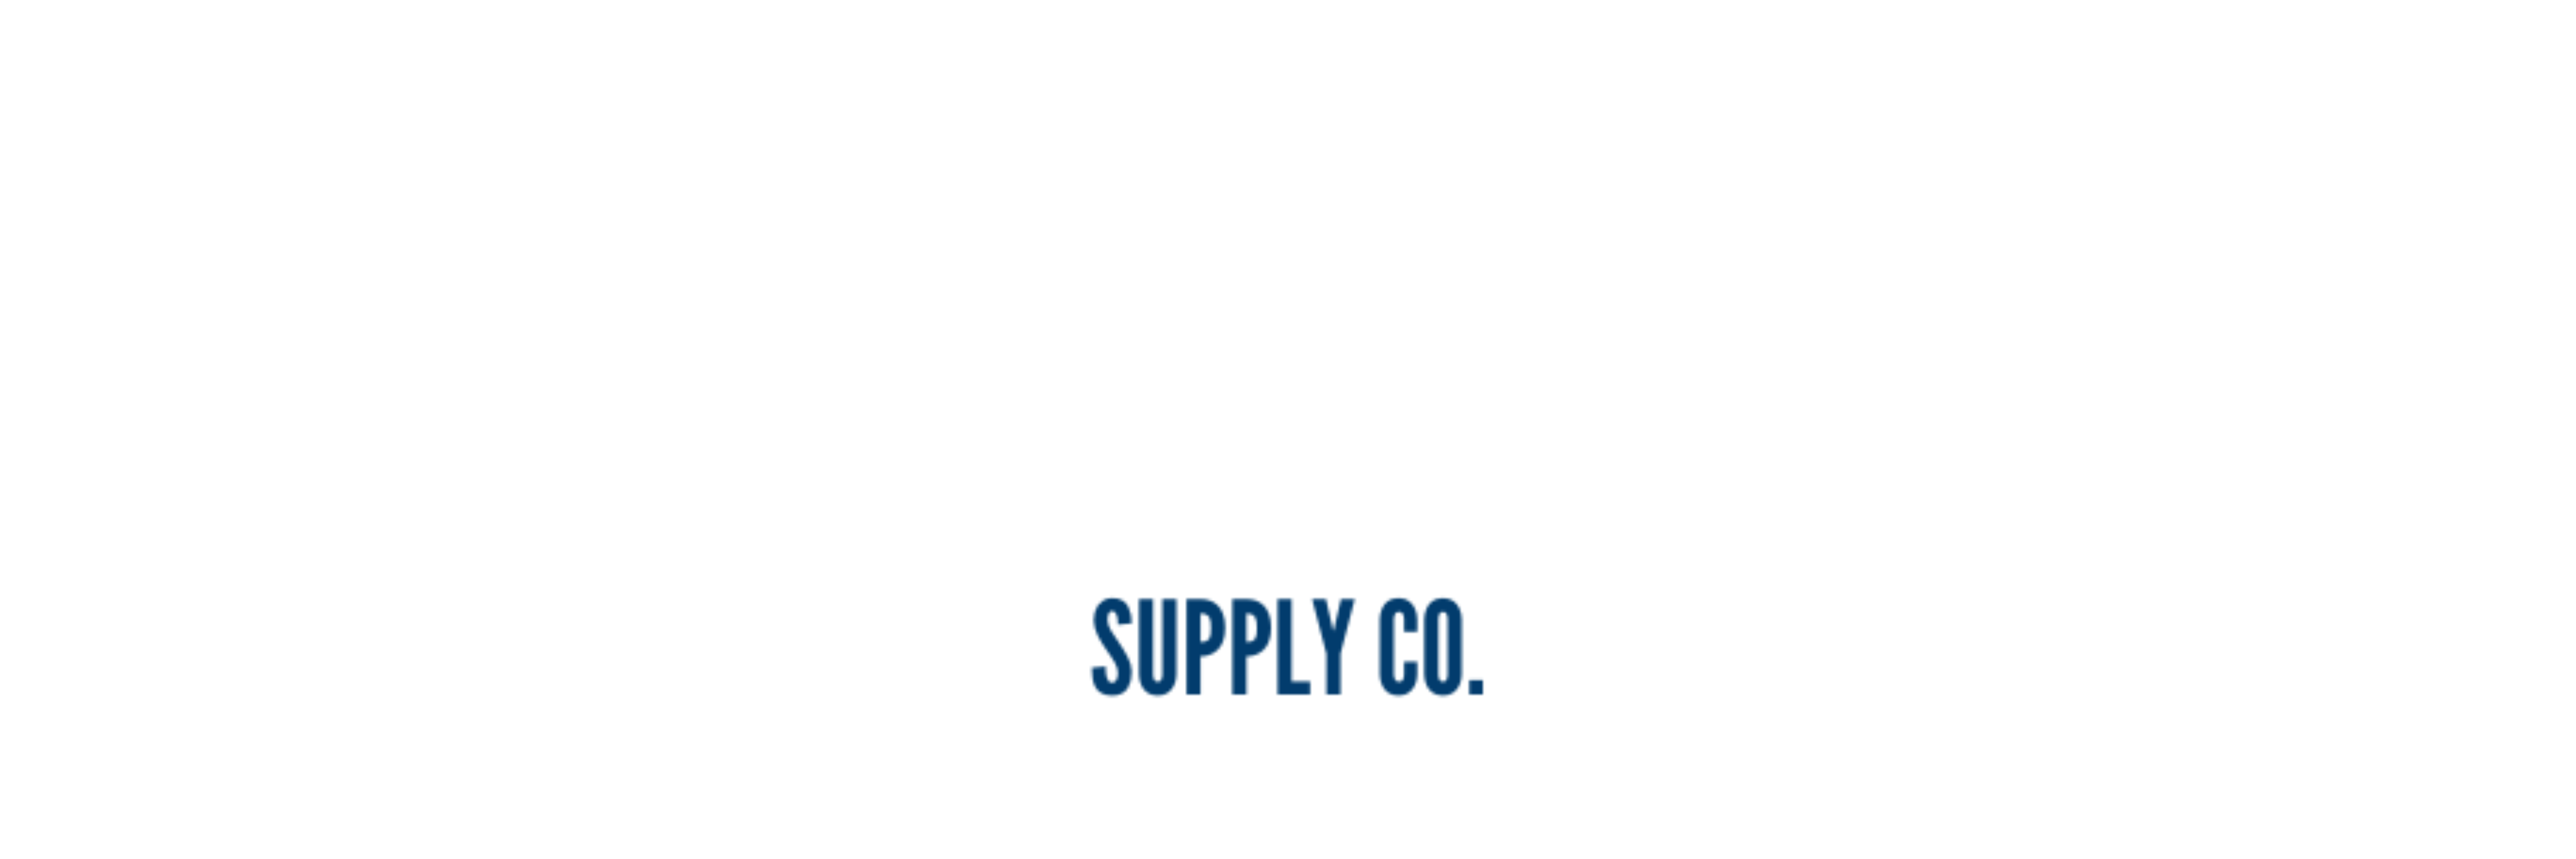 MHG Supply